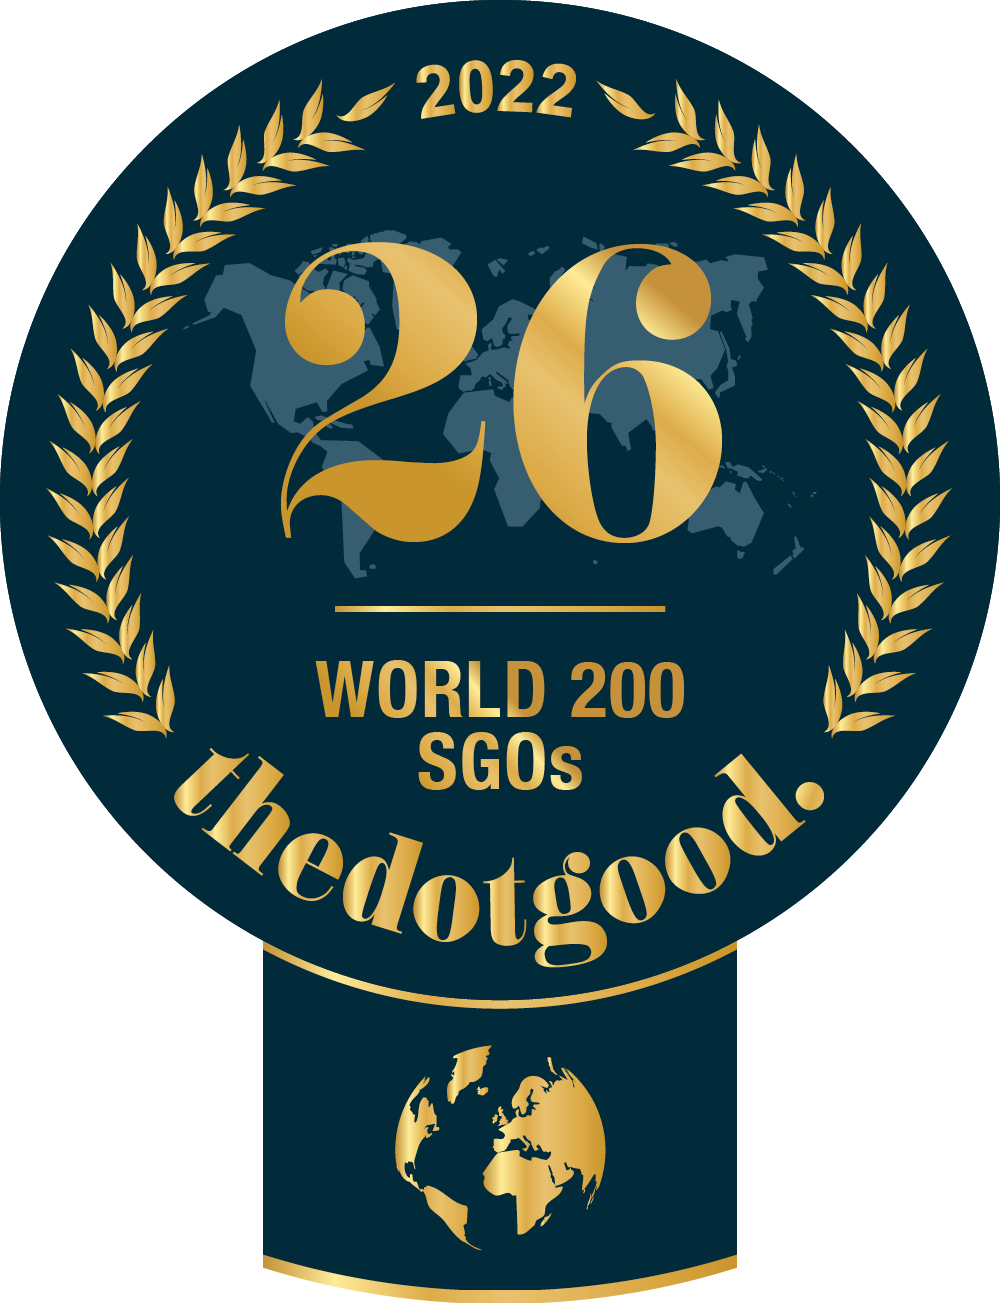 AFLATOUN INTERNATIONAL is world ranked on thedotgood.